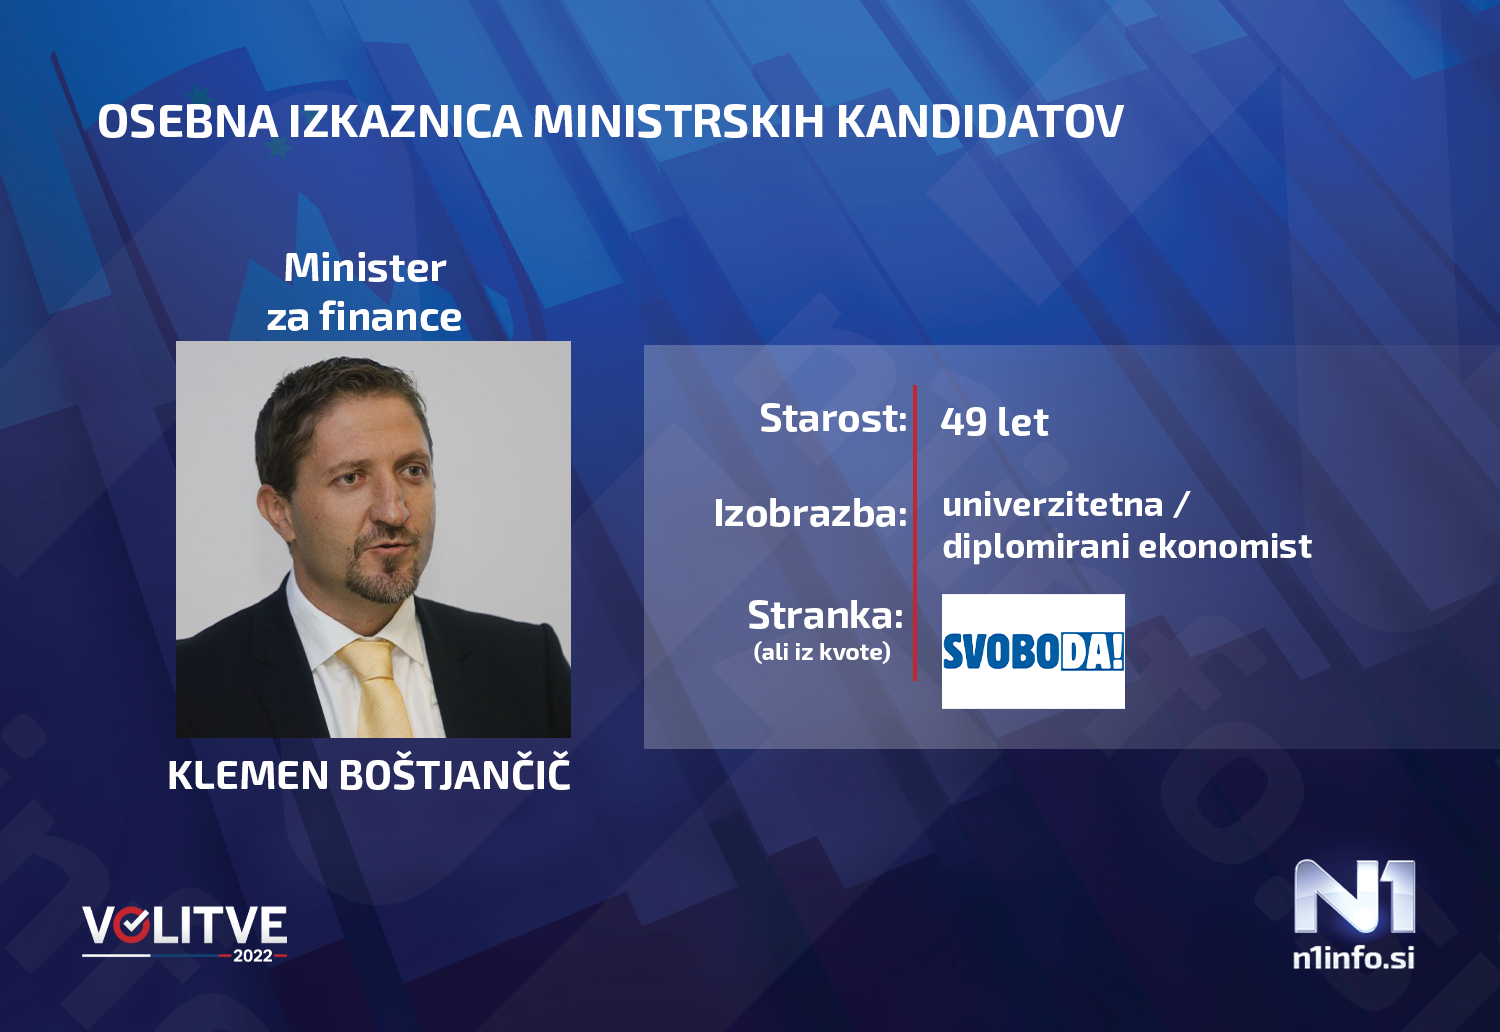 Kdo so ministri 2022, minister za finance, klemen boštjančič